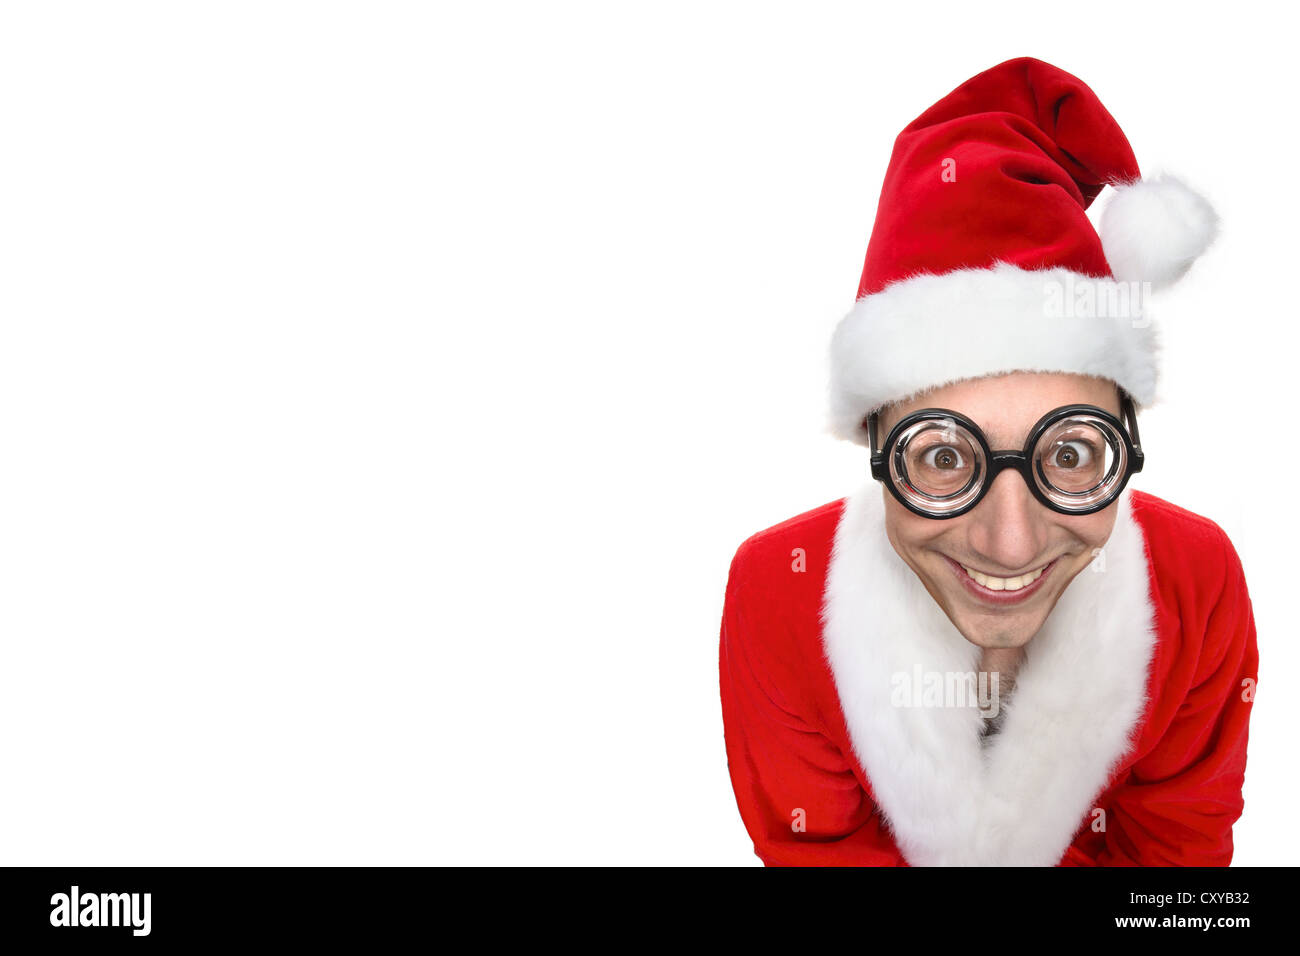 Smiling man dressed as Santa Claus wearing oversized novelty glasses Stock Photo